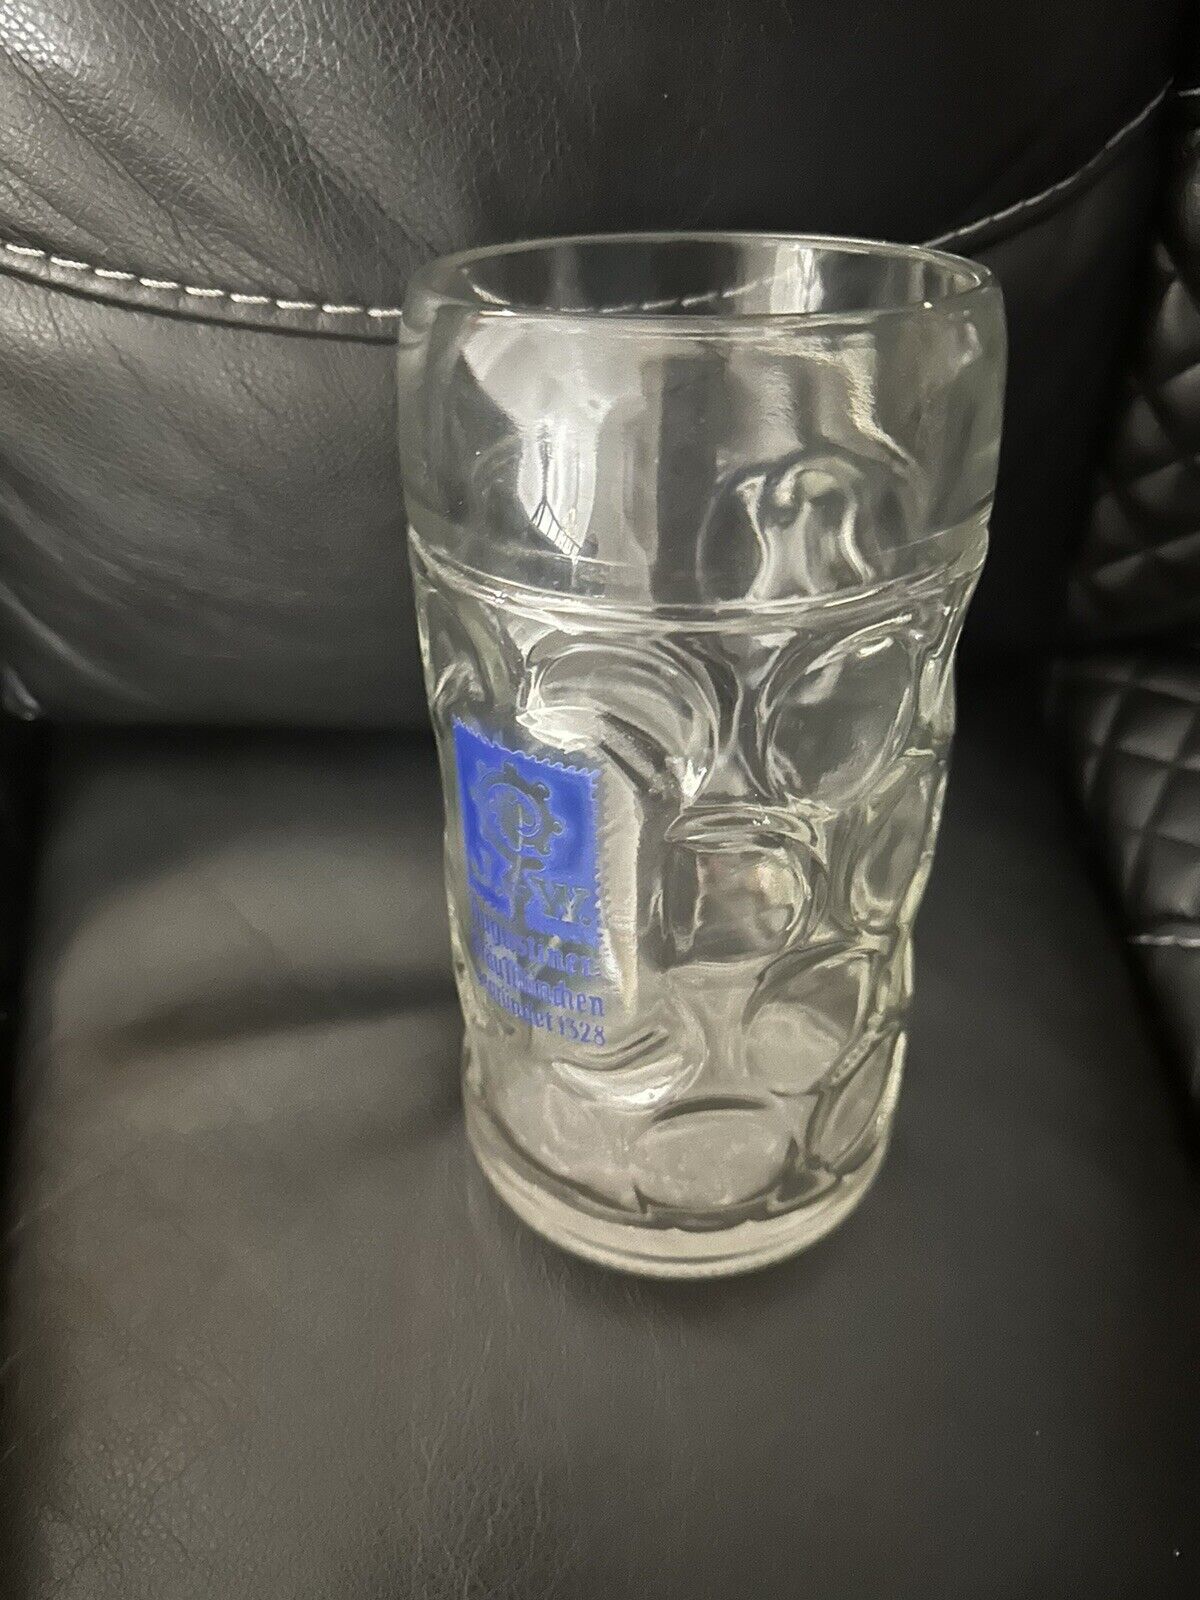 Dimpled Bubble Glass J.W. Augustiner Brau Munchen gegrundet 1328 Beer Stein 1L A